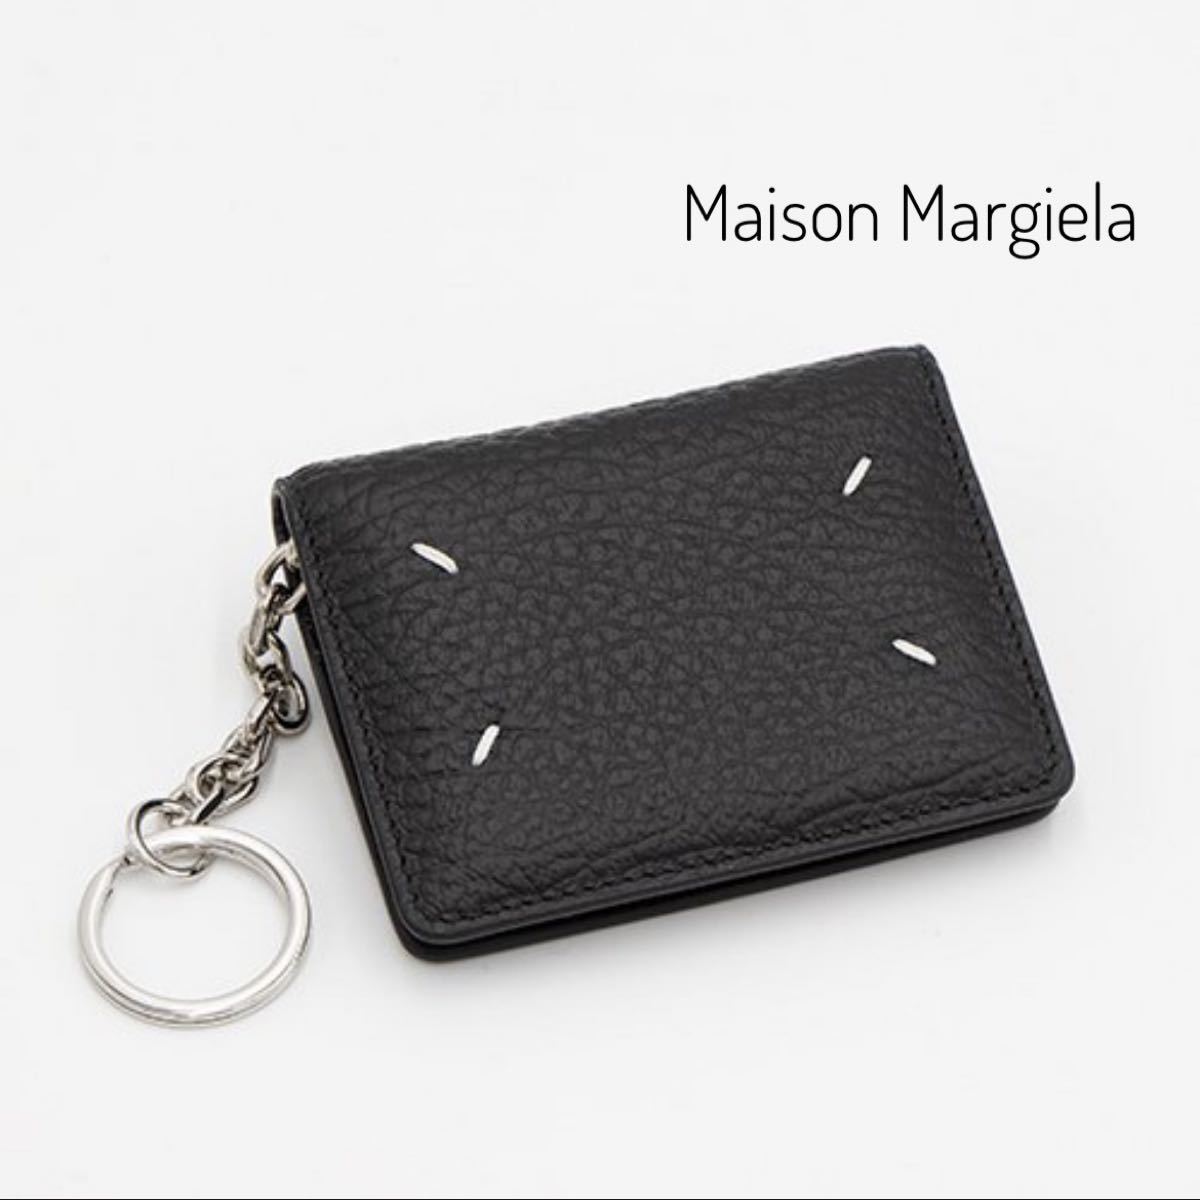 Maison Margiela(メゾンマルジェラ) キーケース 小物 キーケース 小物 